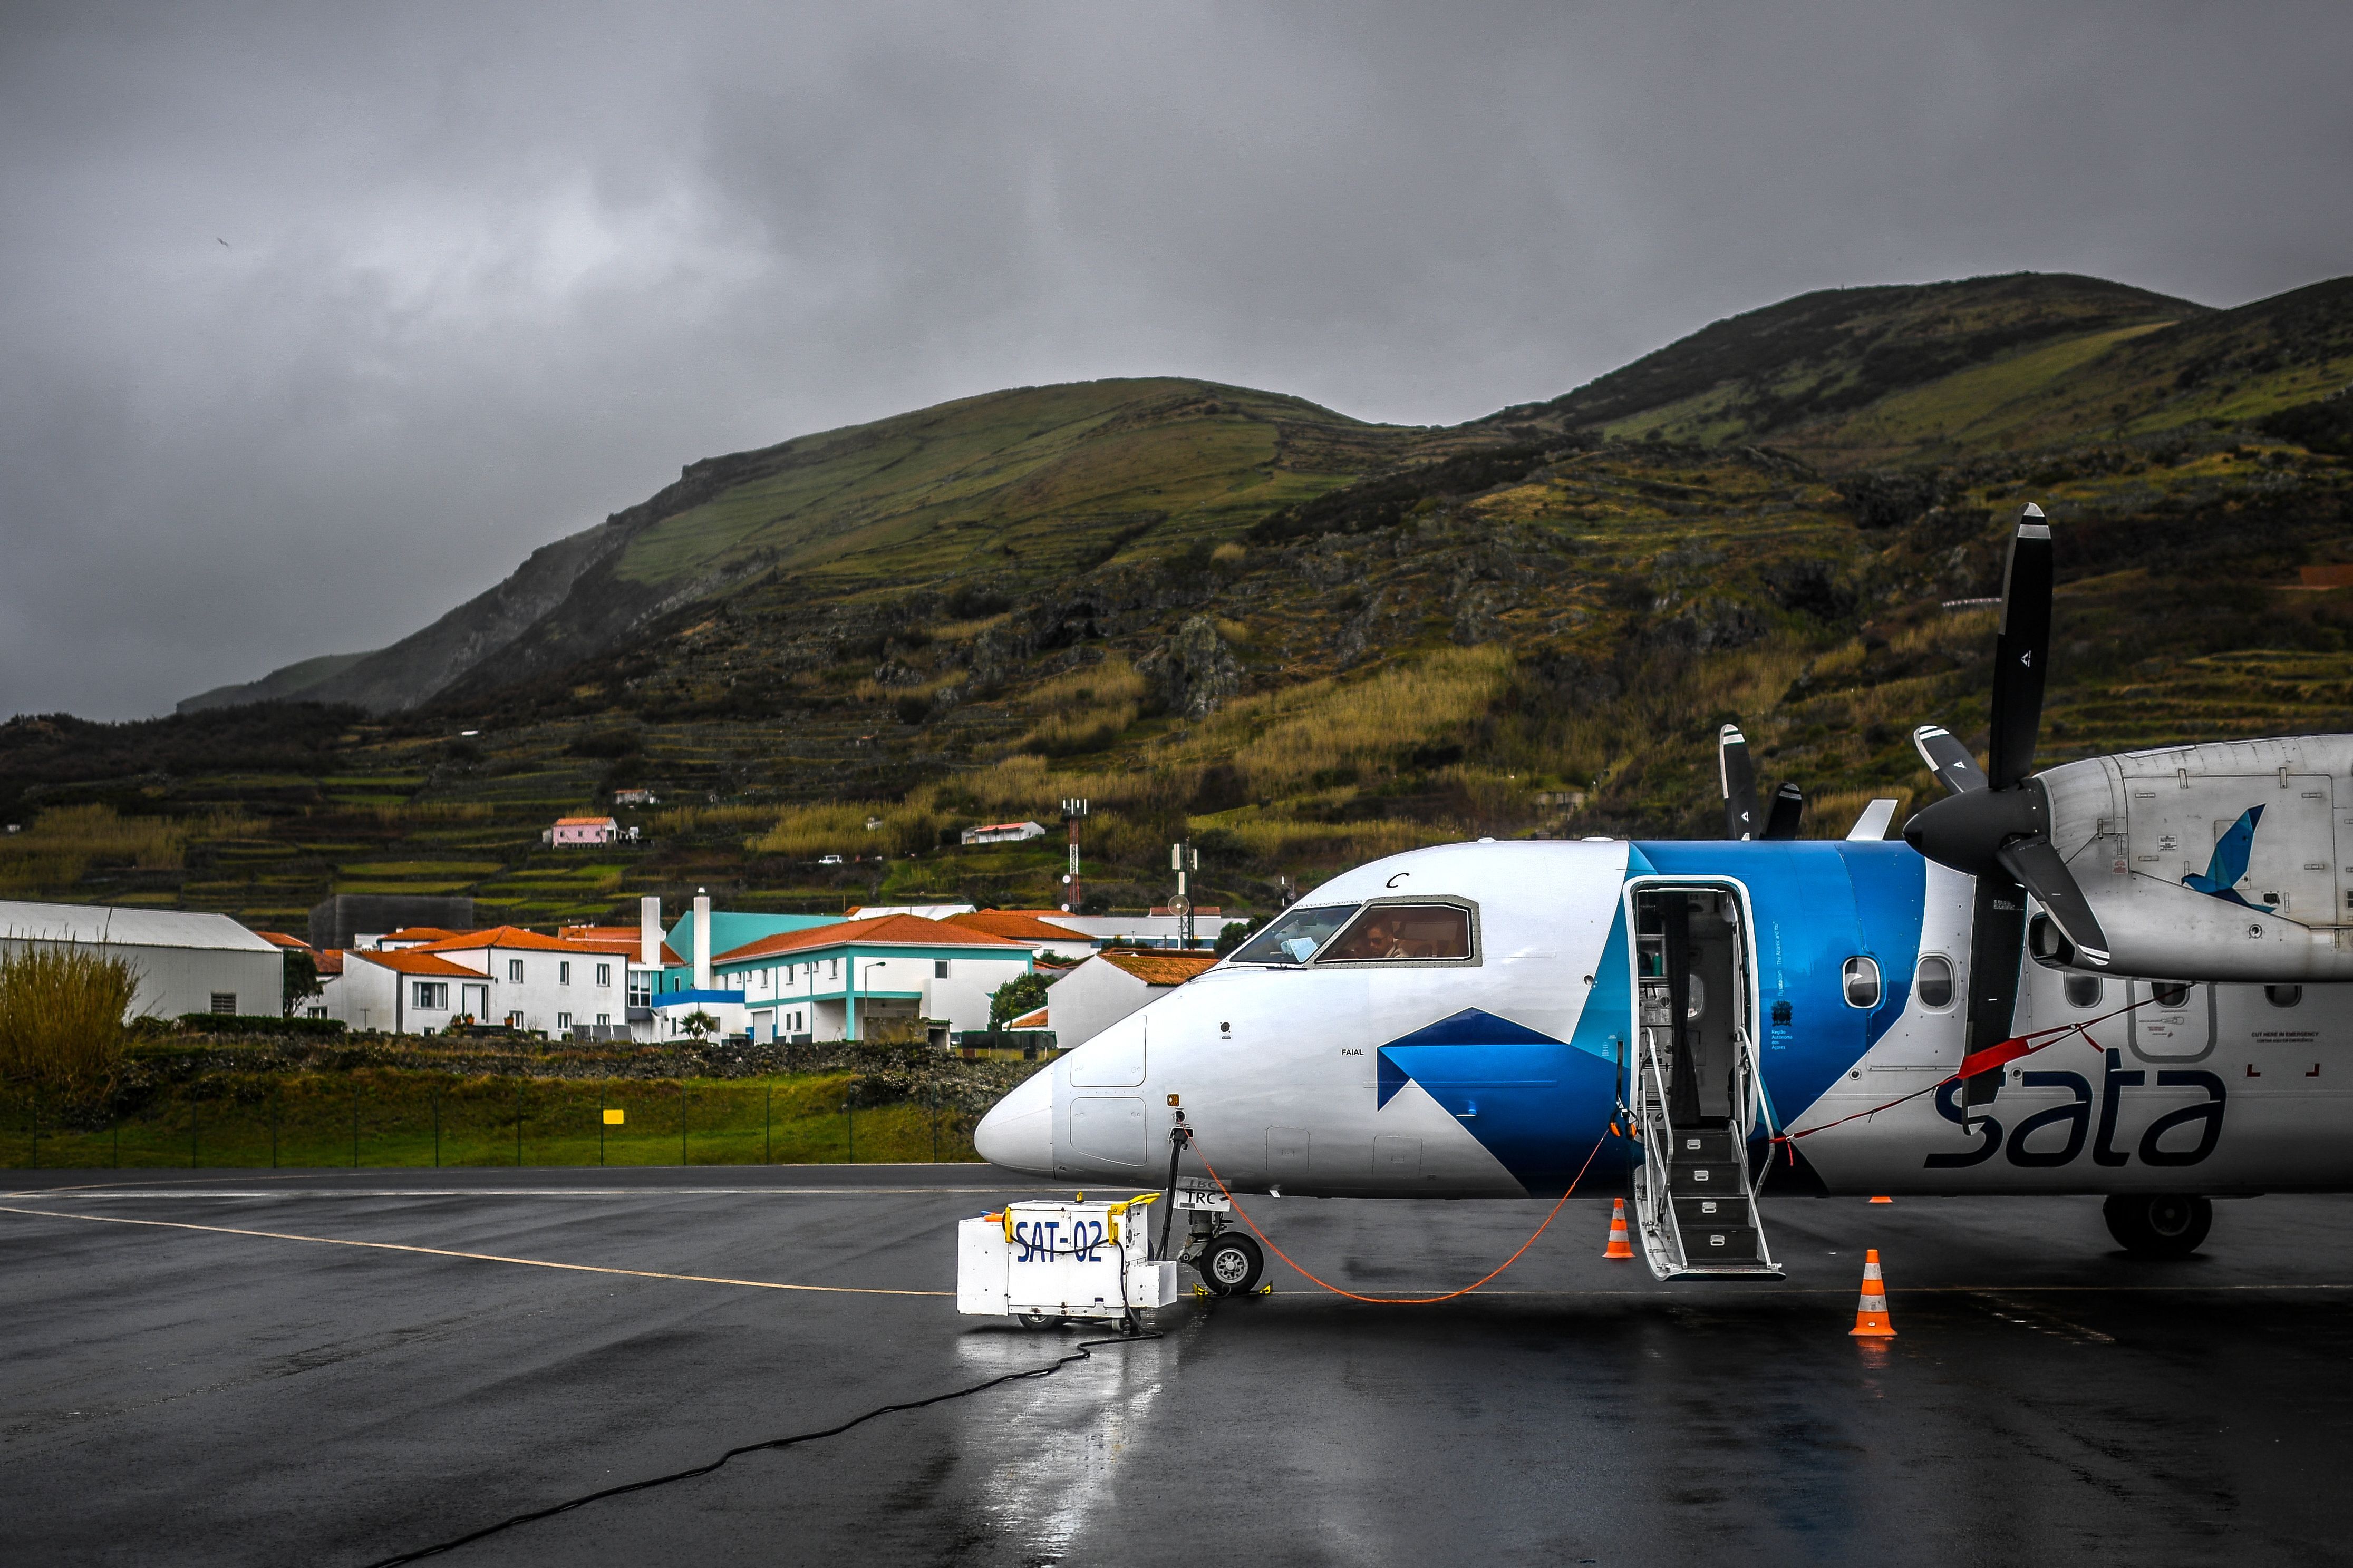 SATA Air Açores Dash 8 sat on the runway